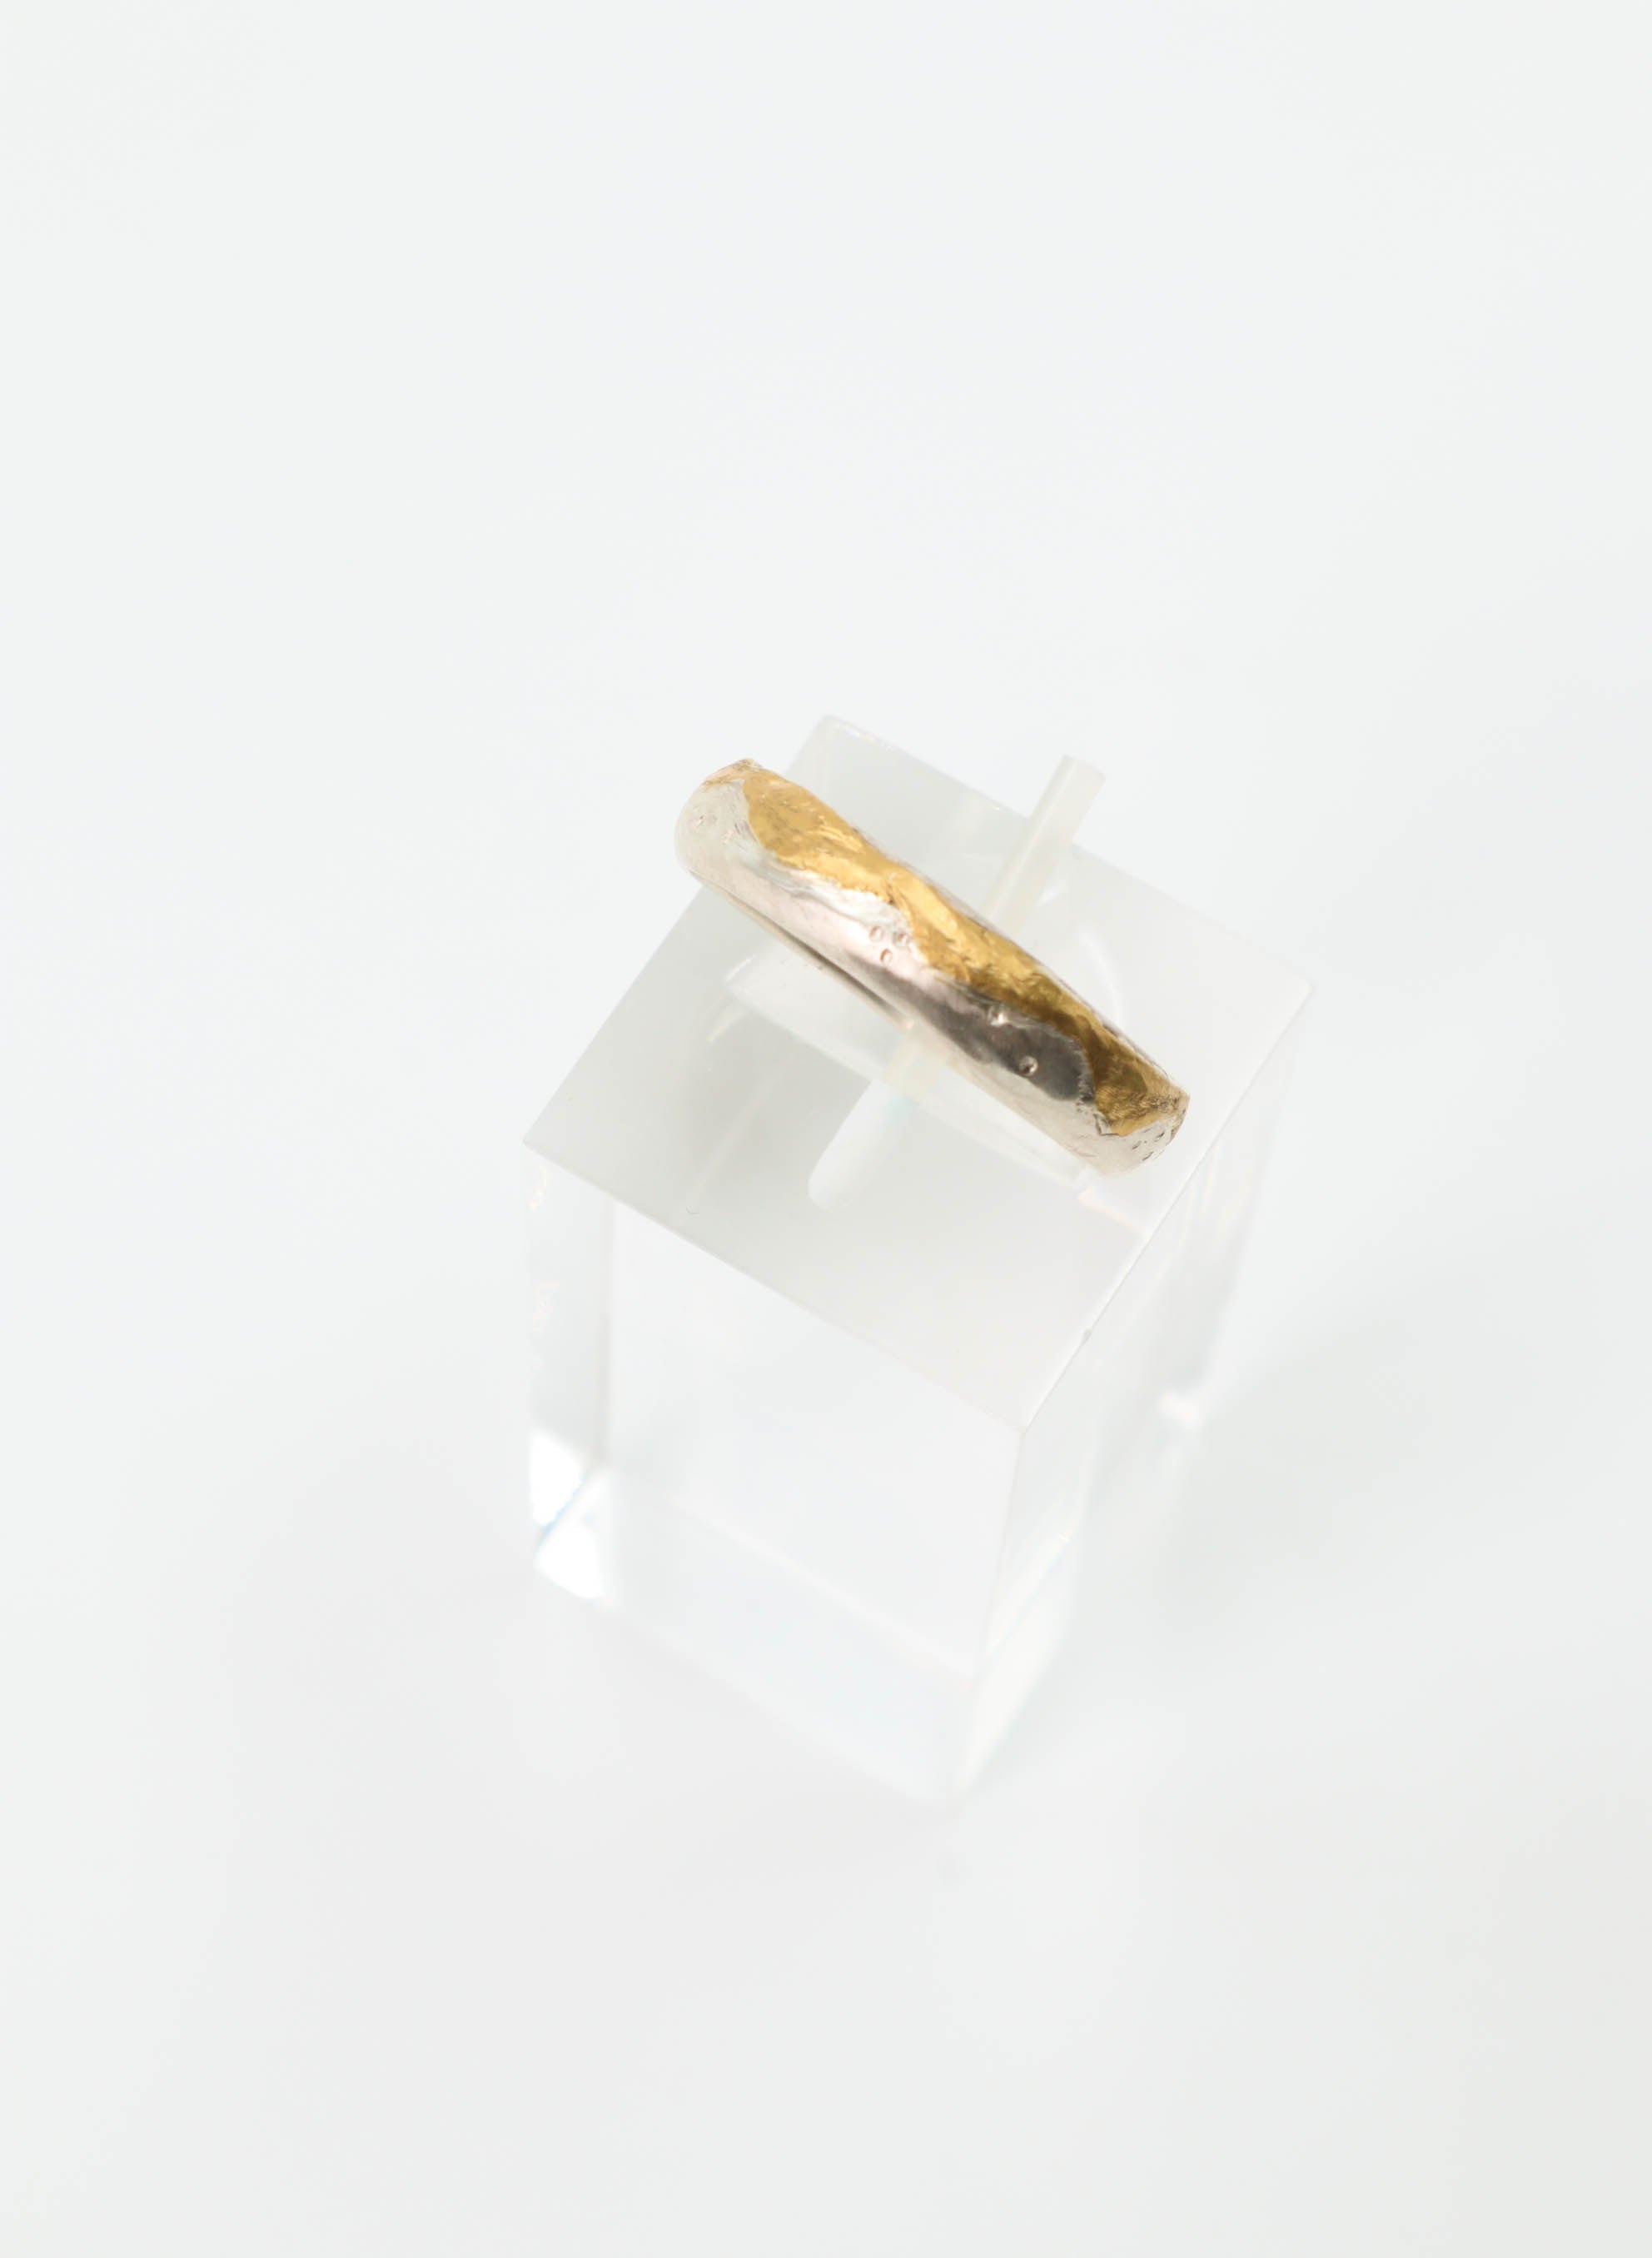 Dawn Chorus Silver and 24ct Gold Ring